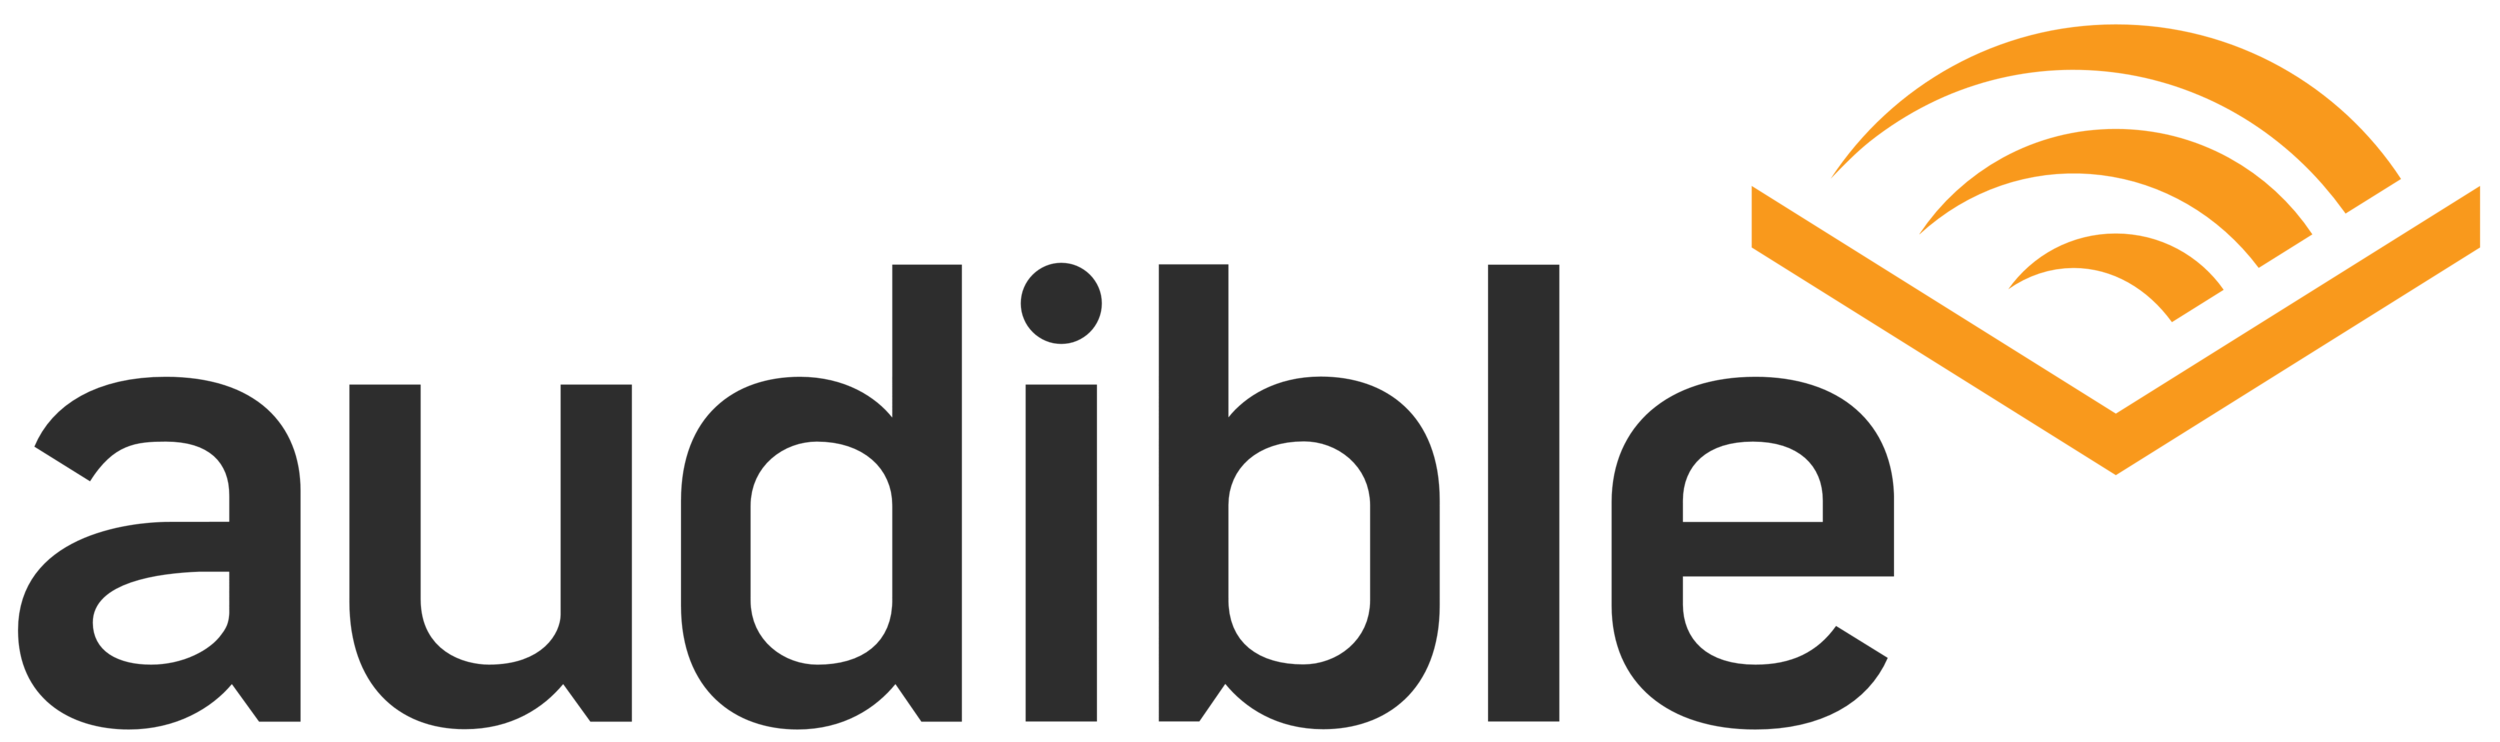 Audible_logo.png